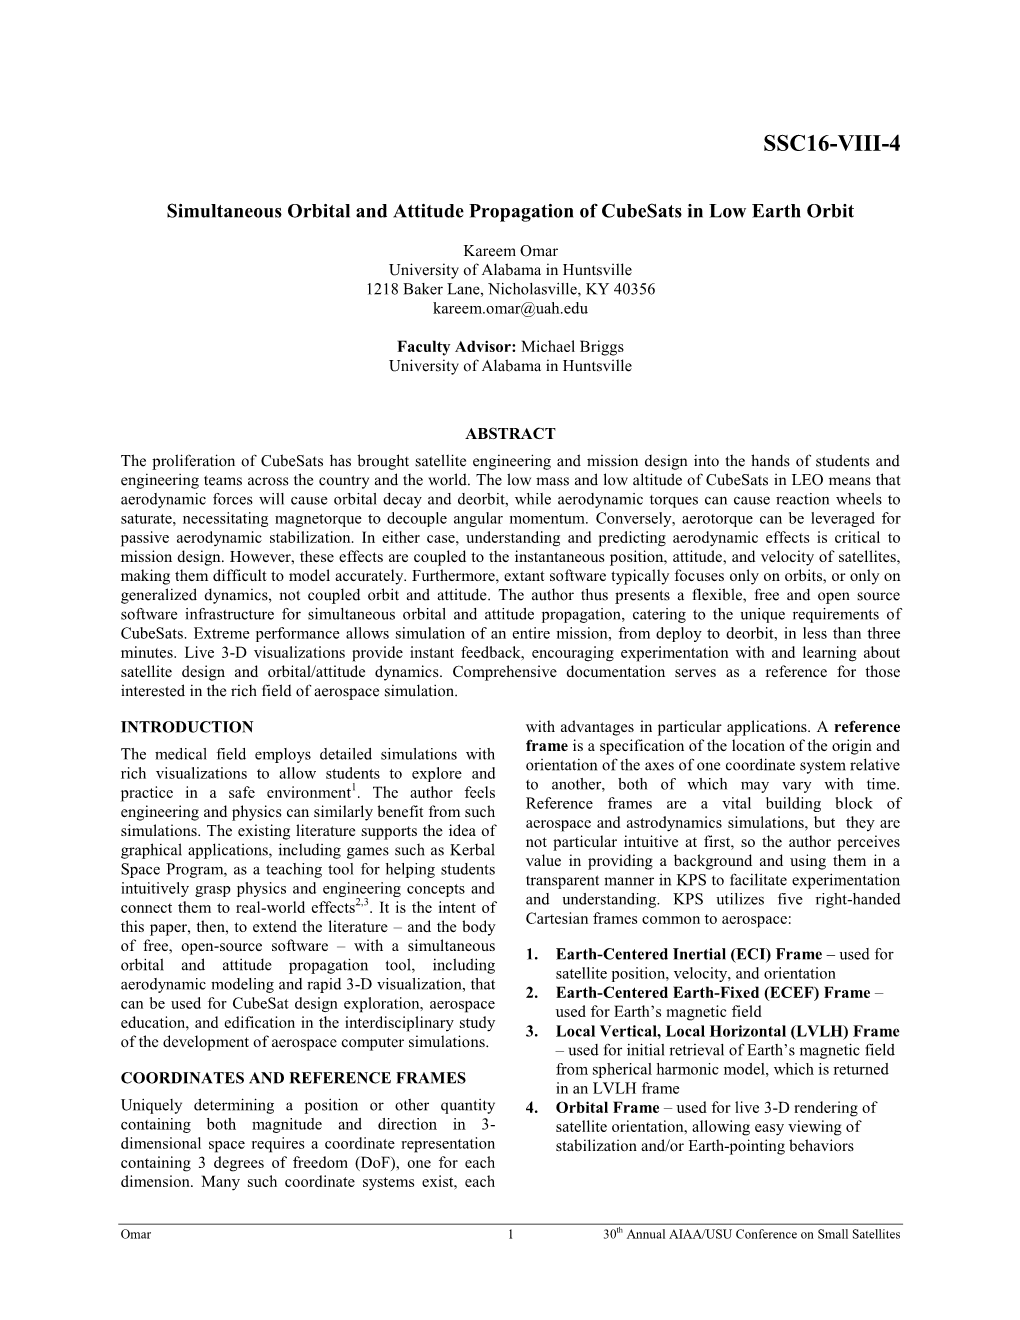 Simultaneous Orbital and Attitude Propagation of Cubesats in Low Earth Orbit